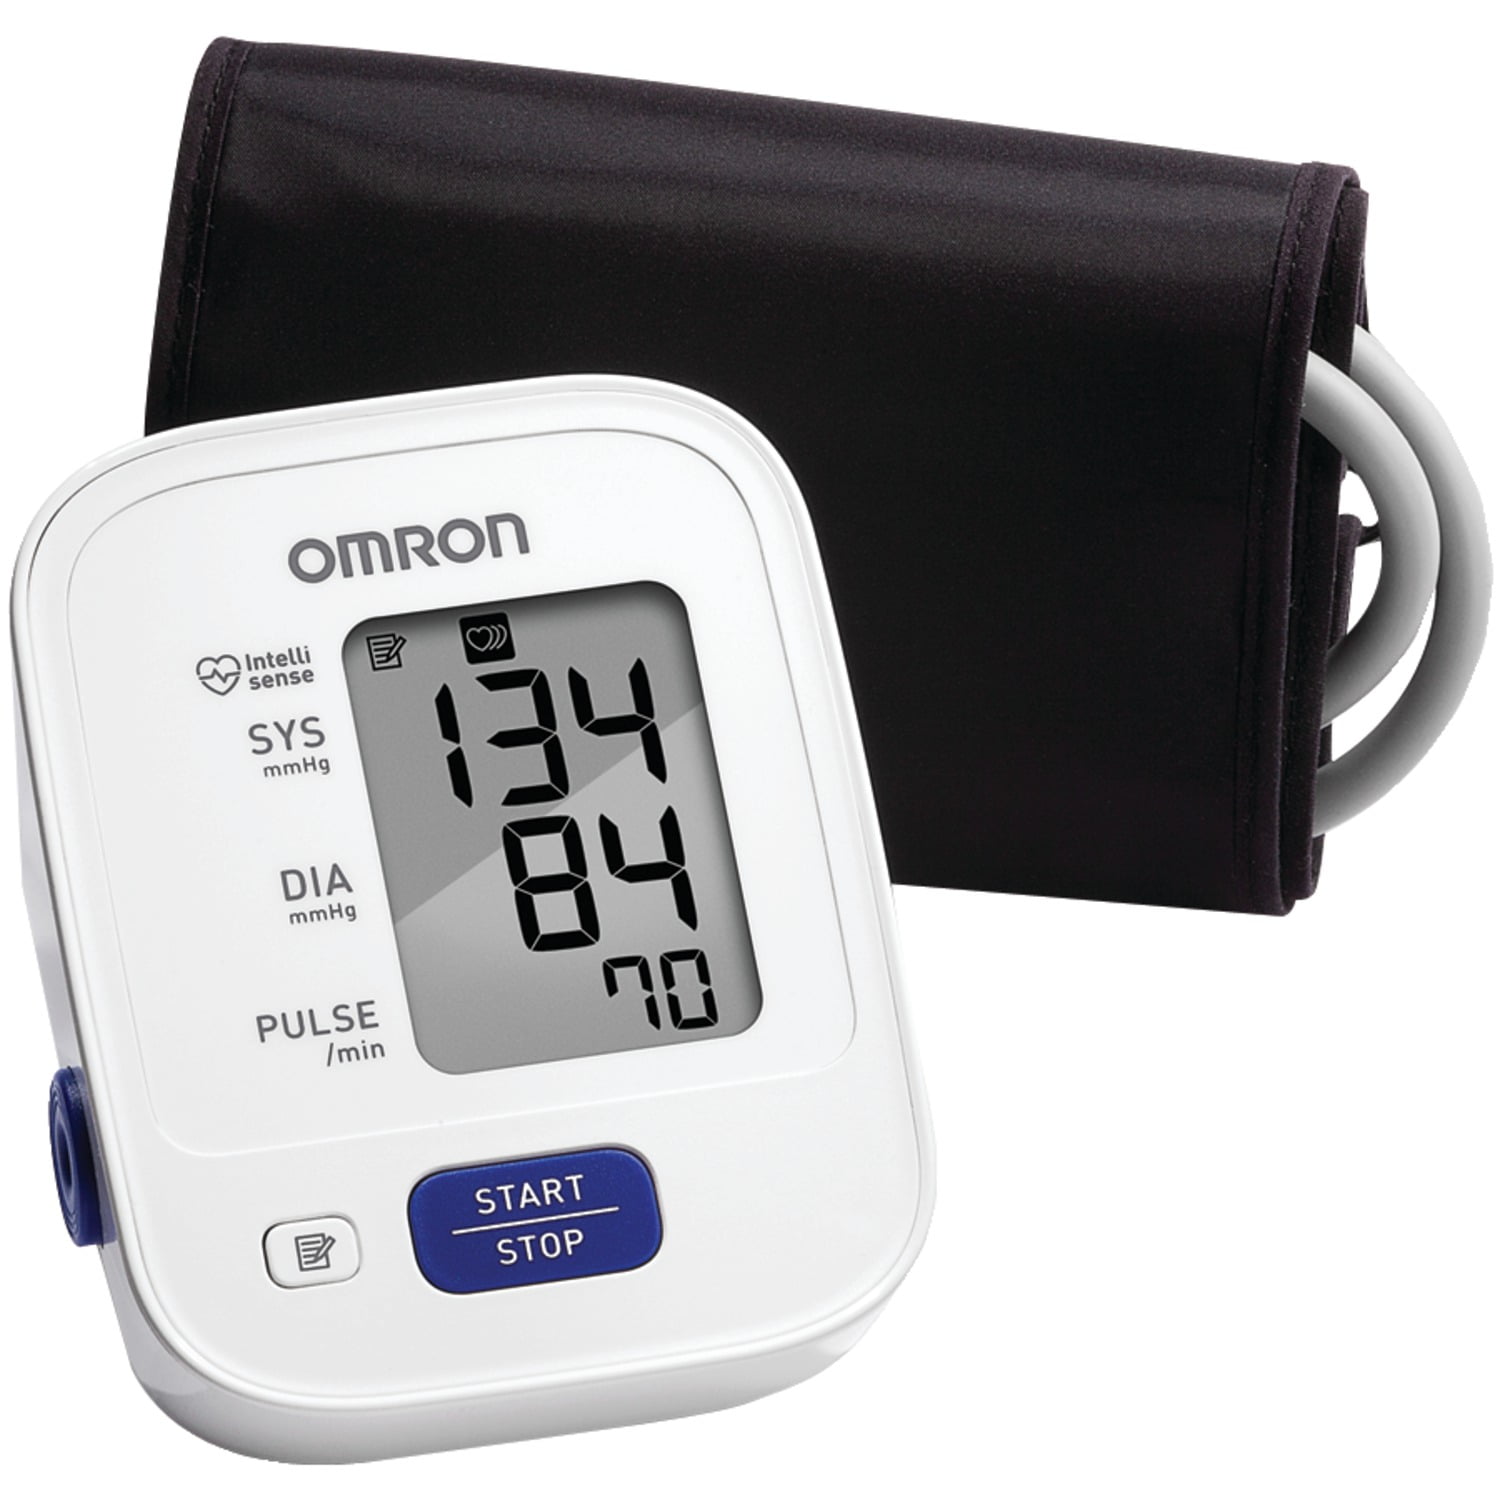  Omron HBF-306C Handheld Body Fat Loss Monitor : Health &  Household